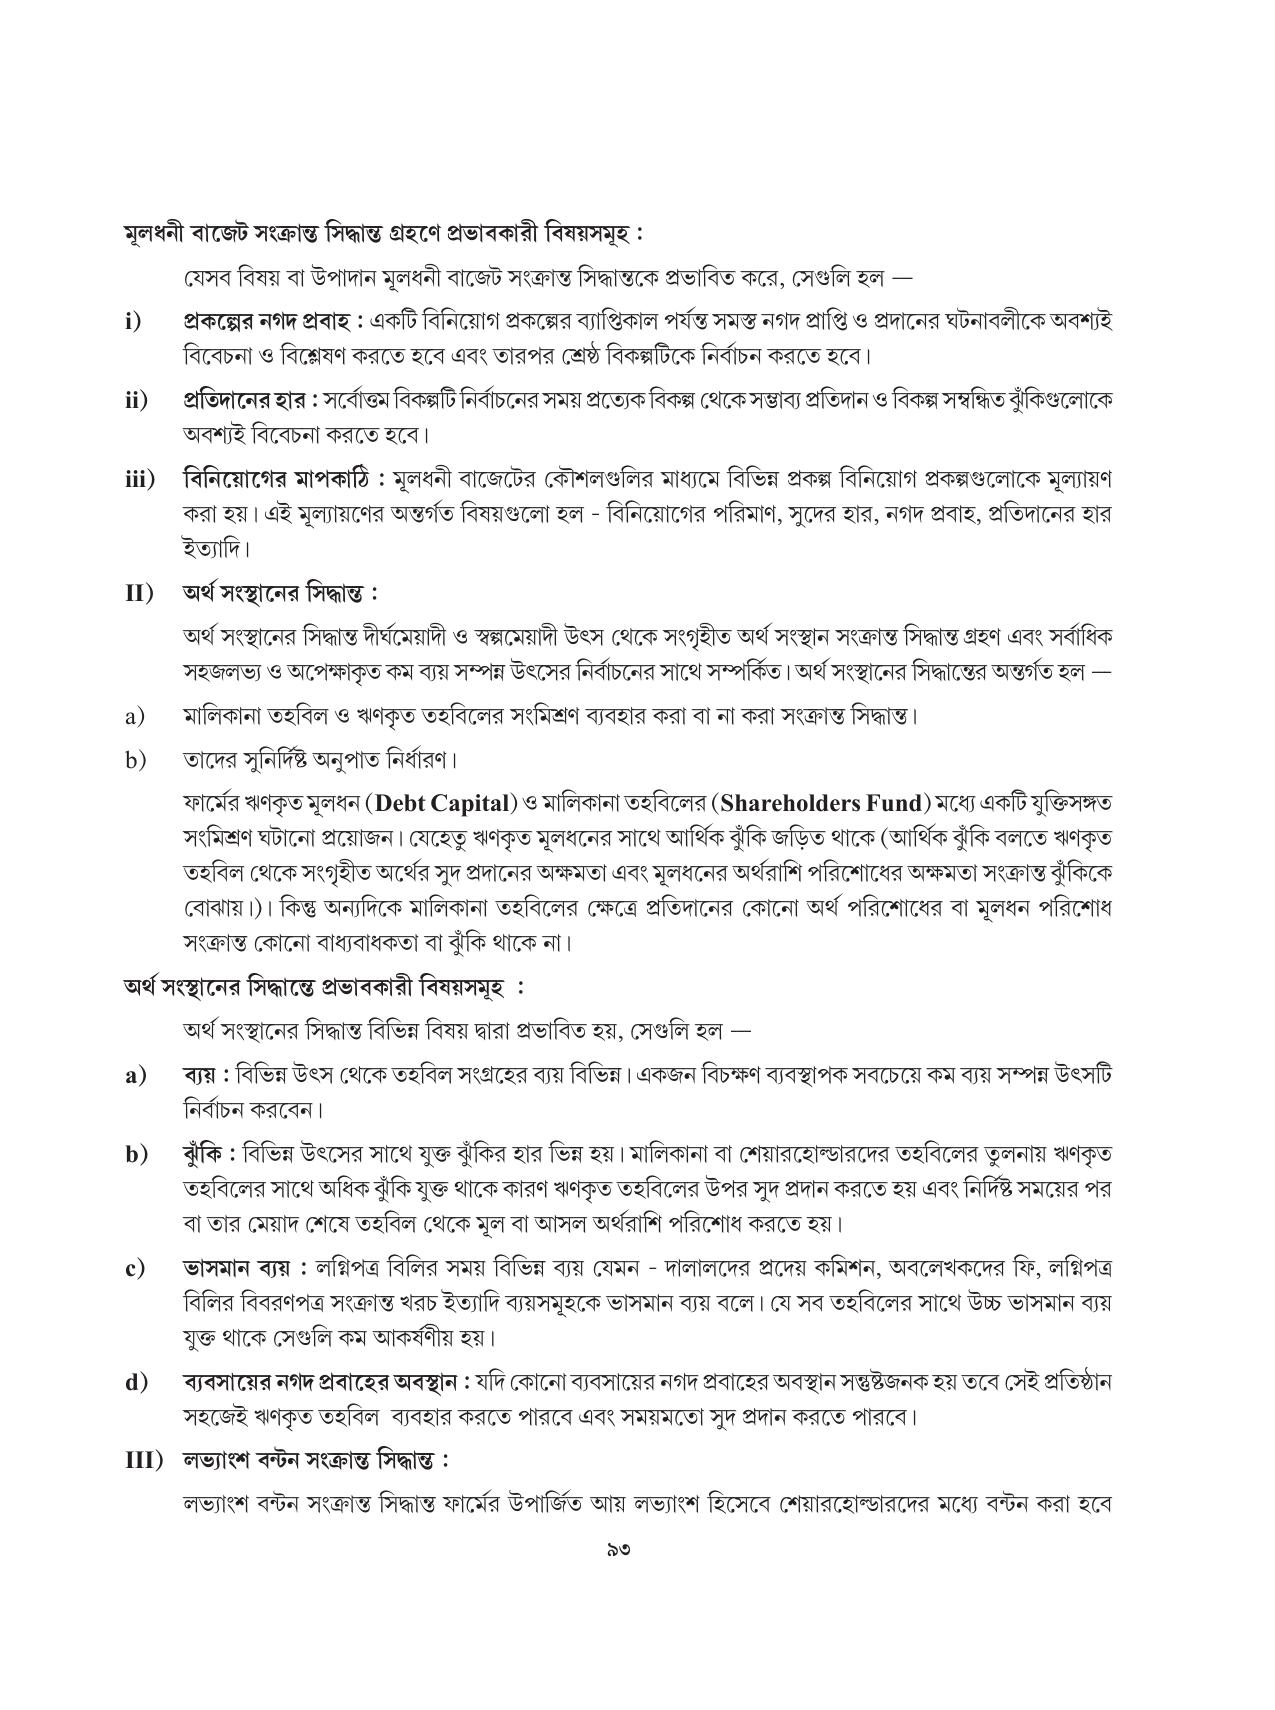 Tripura Board Class 12 Karbari Shastra Bengali Version Workbooks - Page 93